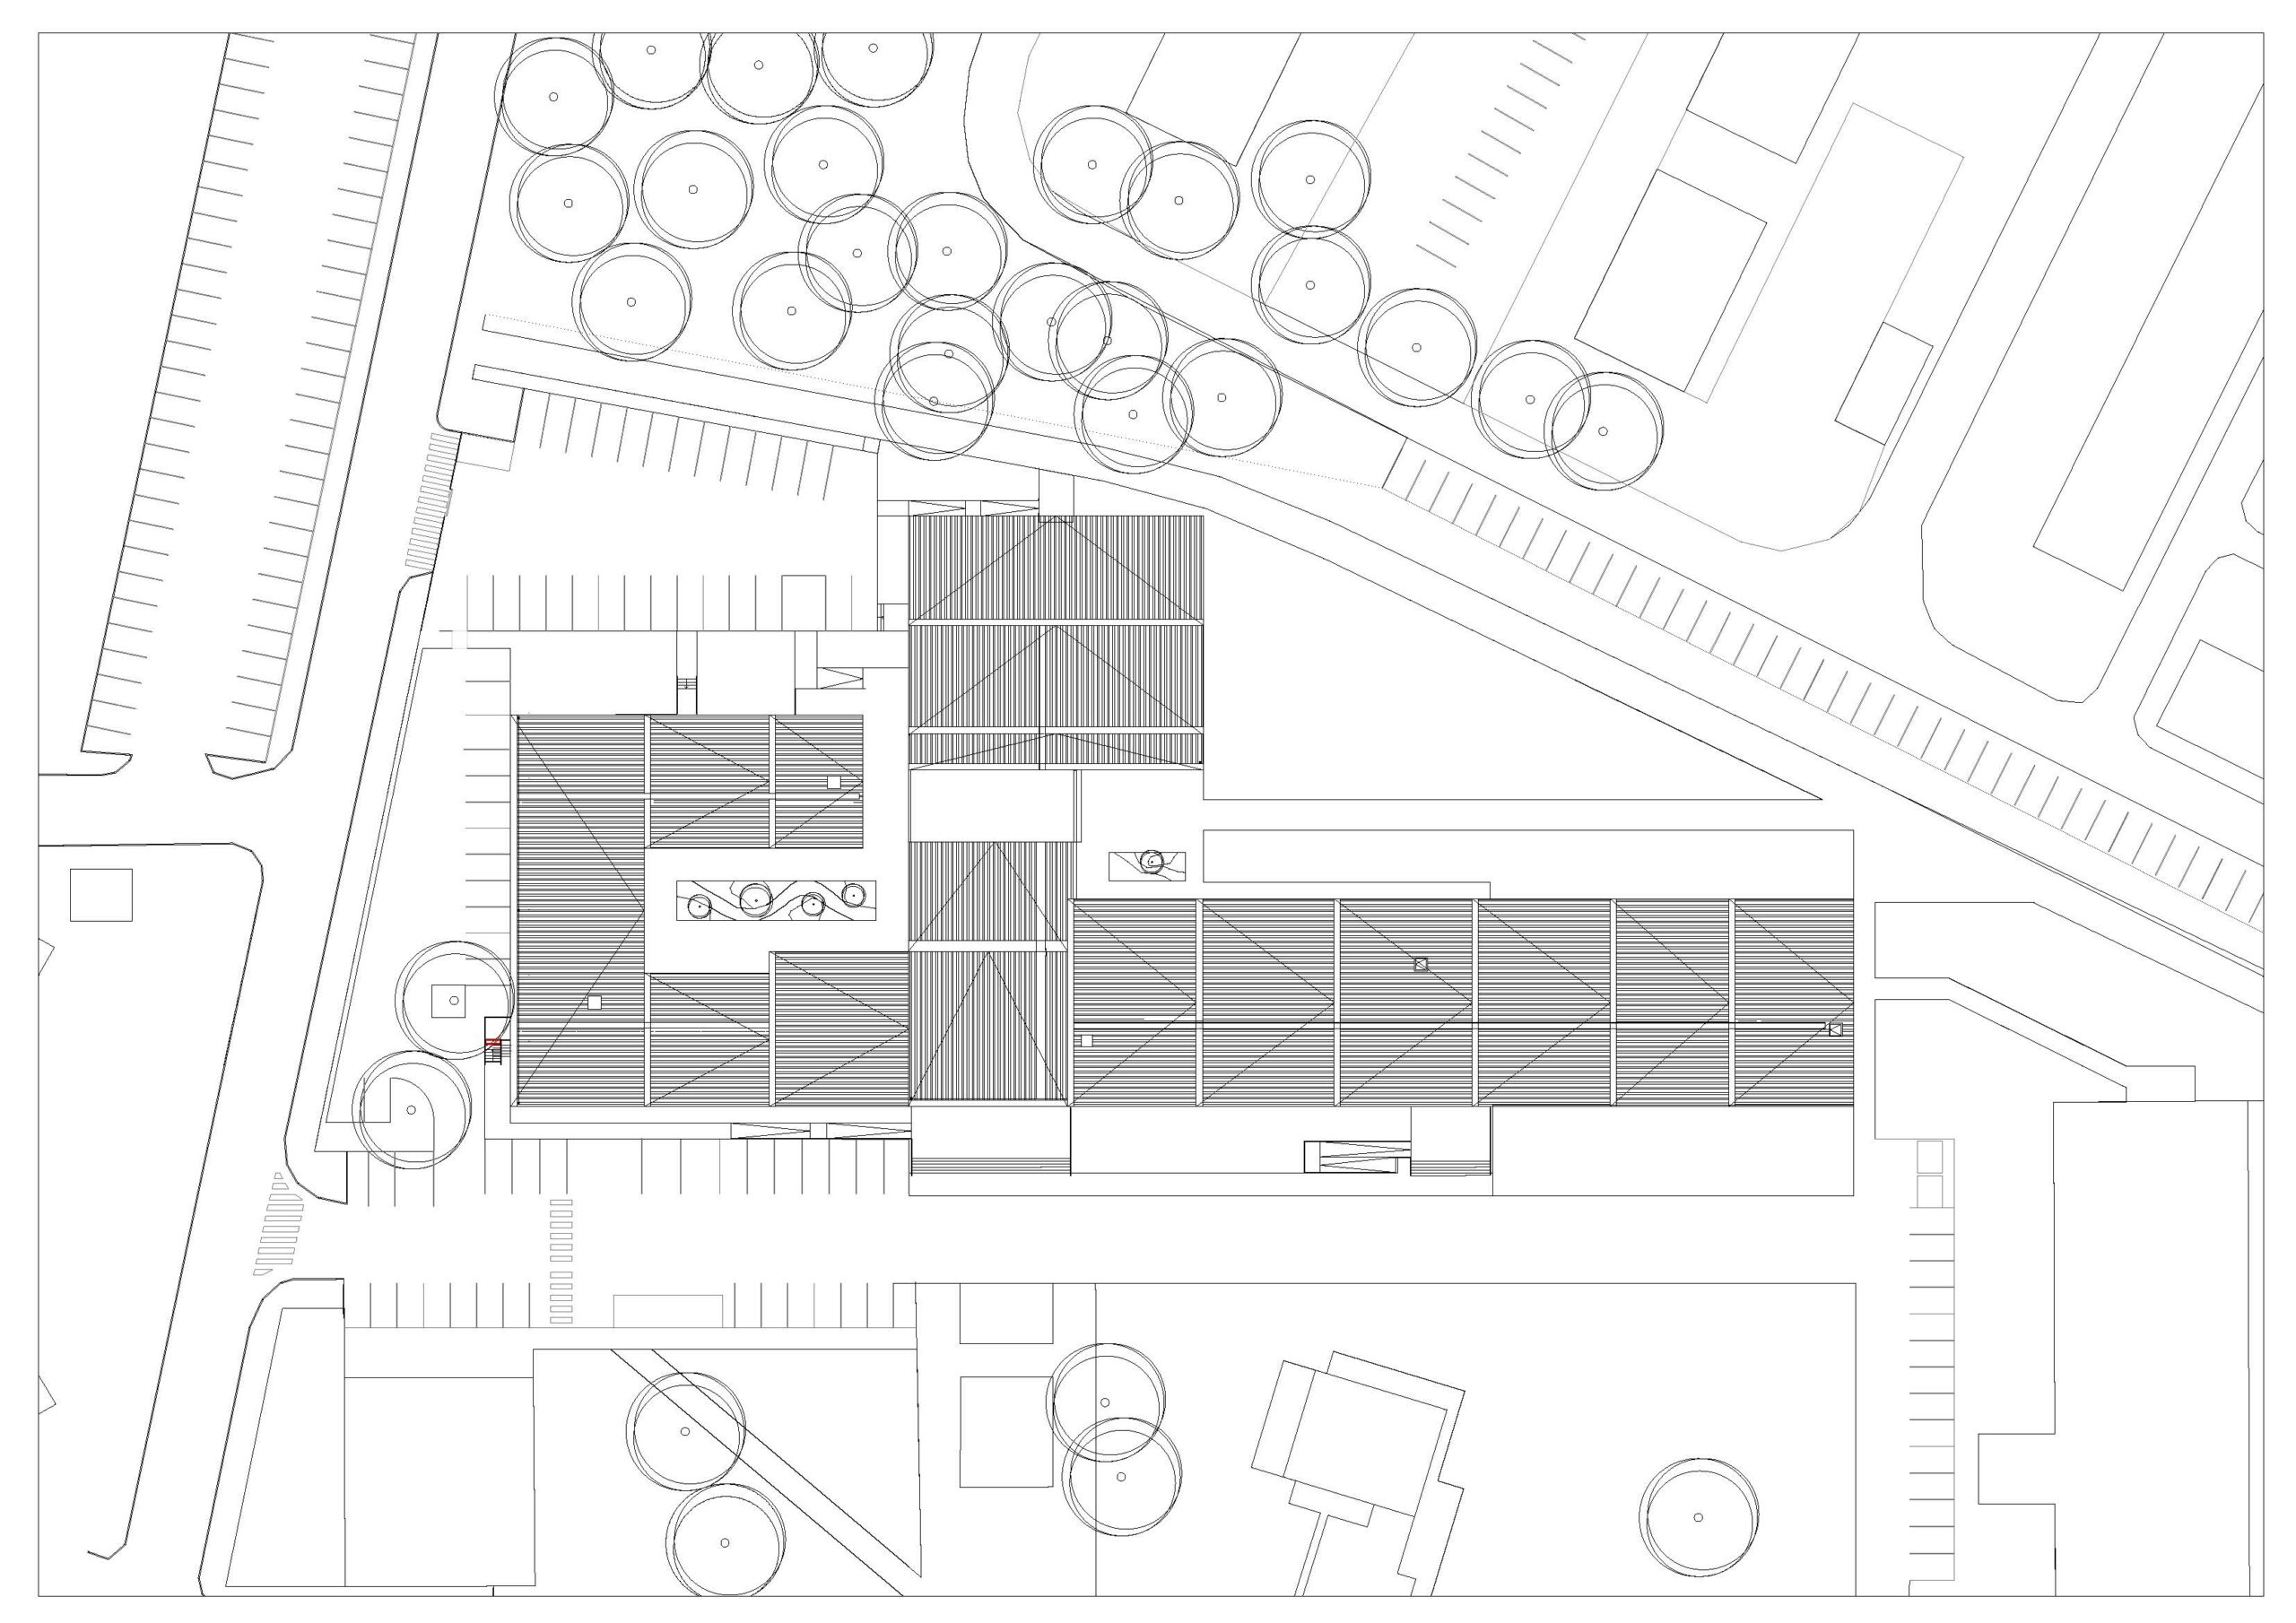 Plan Masse toiture / Schurdi-Lervaud Architecture